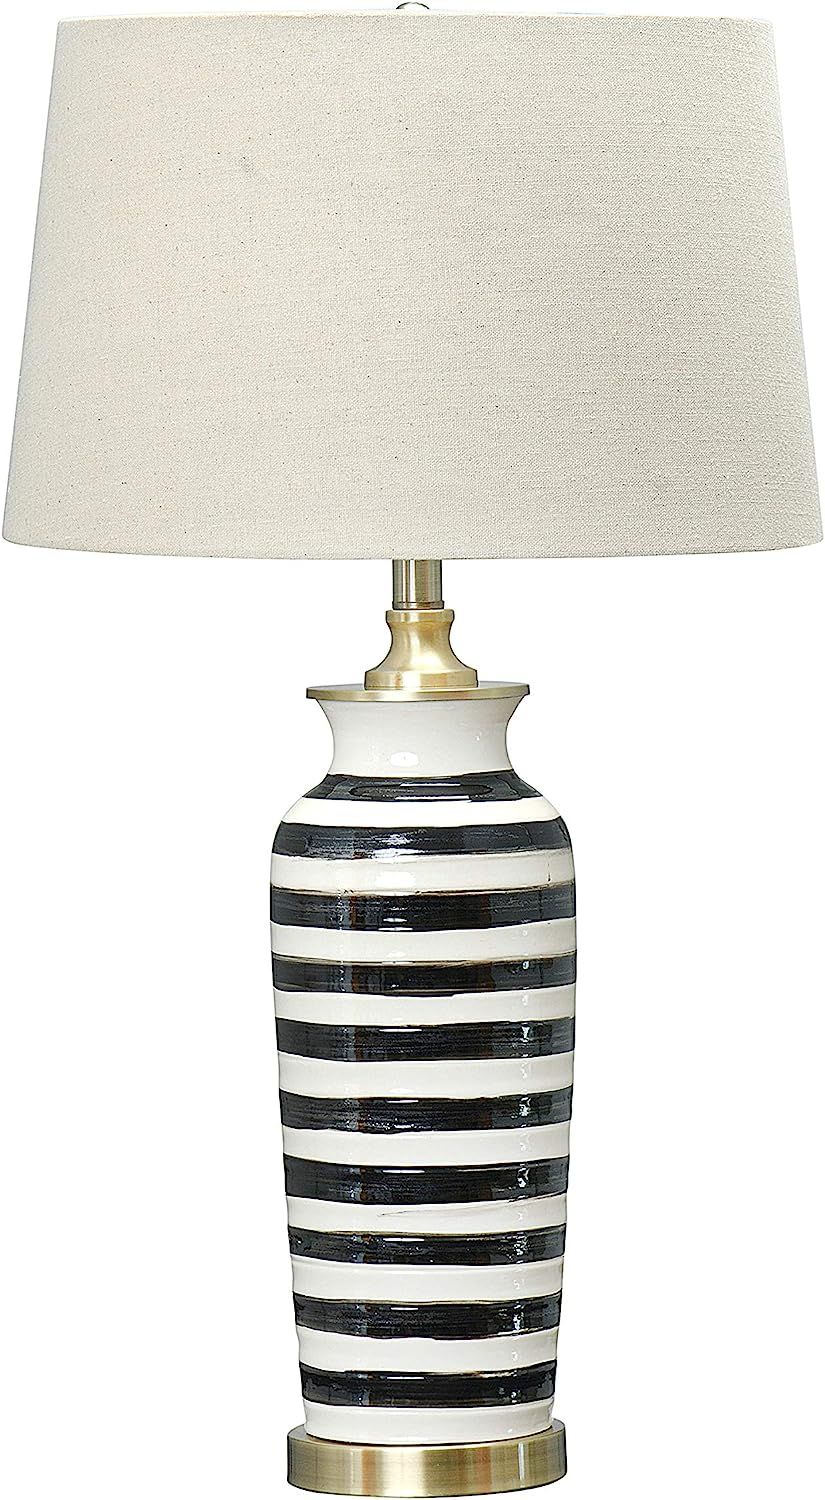 Creative Co-op Creamic, Black and White Striped Table Lamp, Cream | Amazon (US)